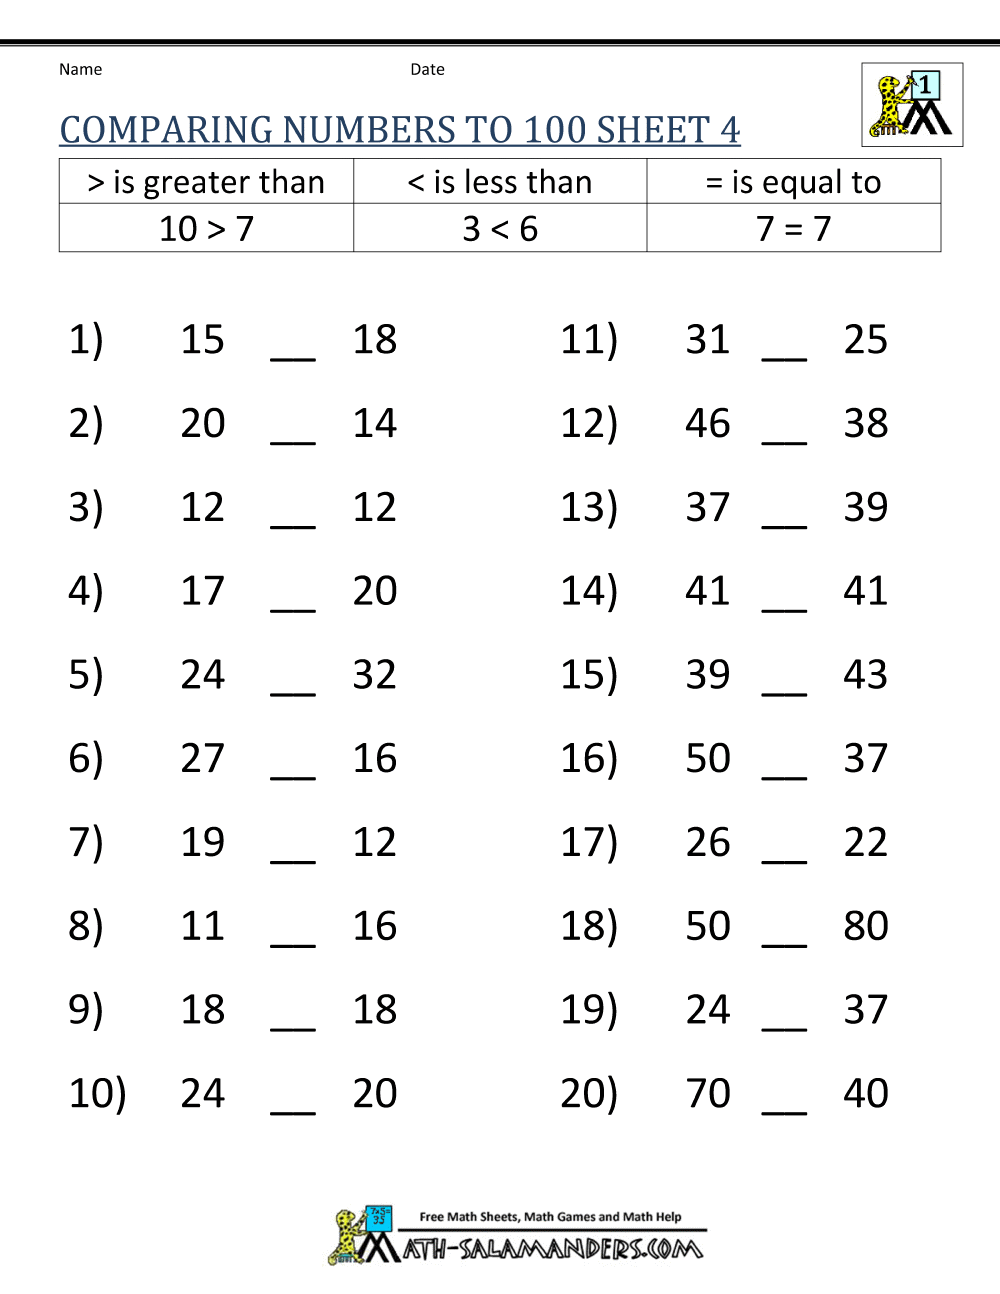 Primary homework help co uk maths number skills